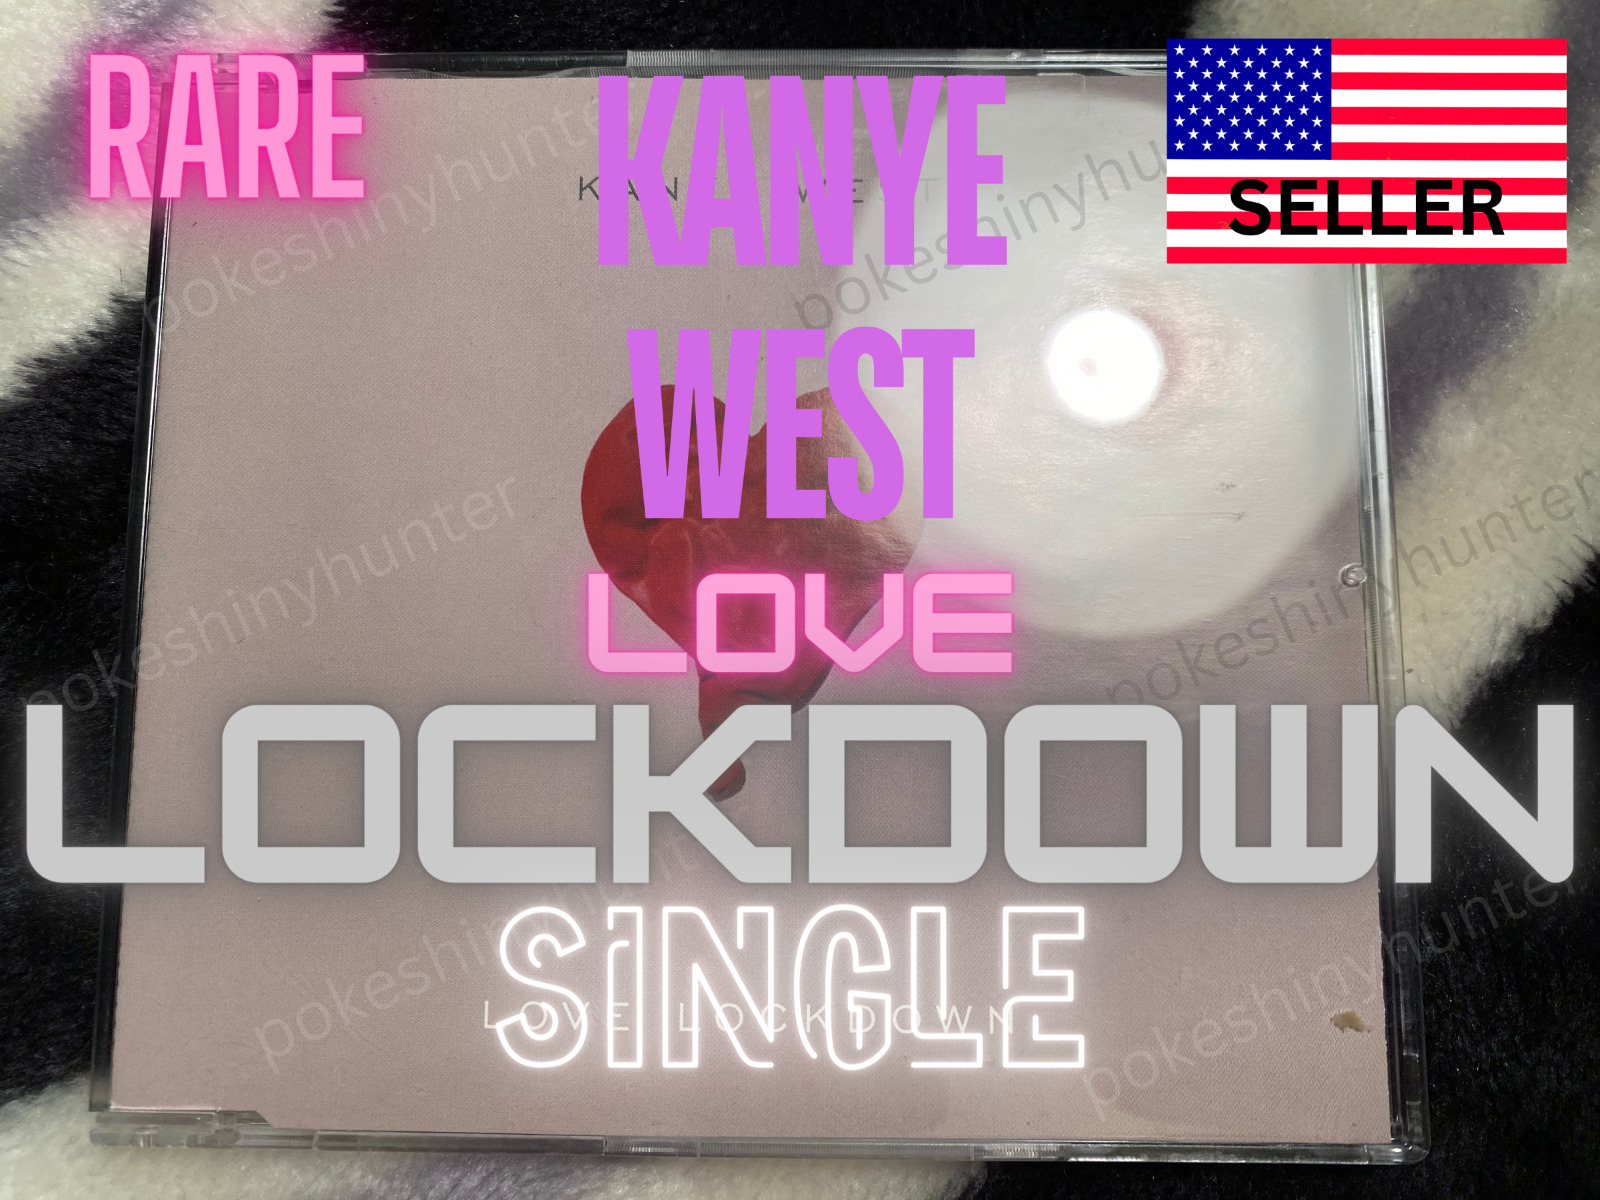 Kanye West Love Lockdown - single CD 2008 RARE UK EU Version